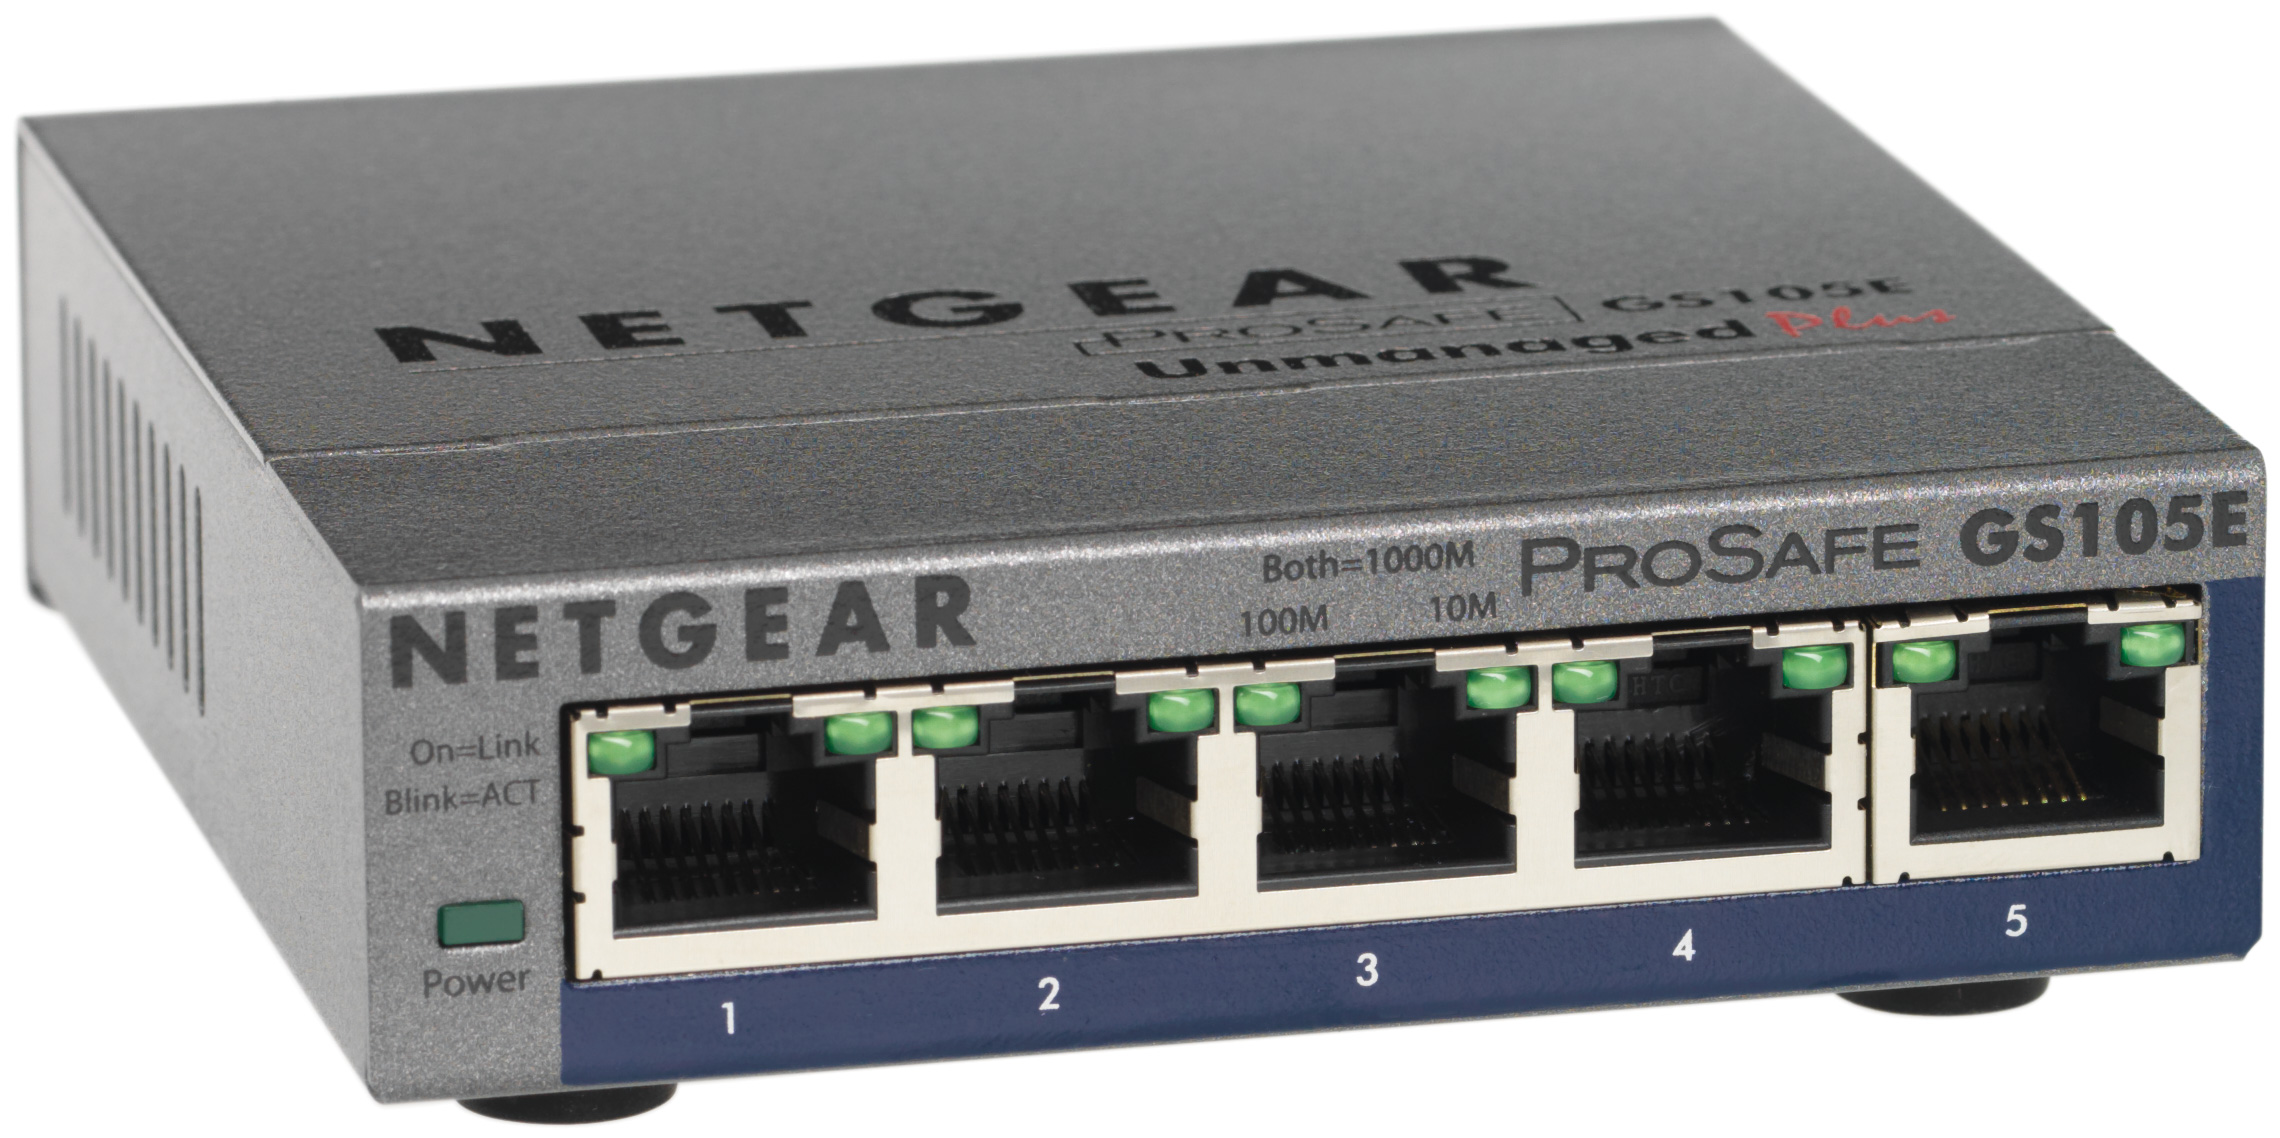 Obrázek NETGEAR 5xGb Plus Switch,web monit.GS105E